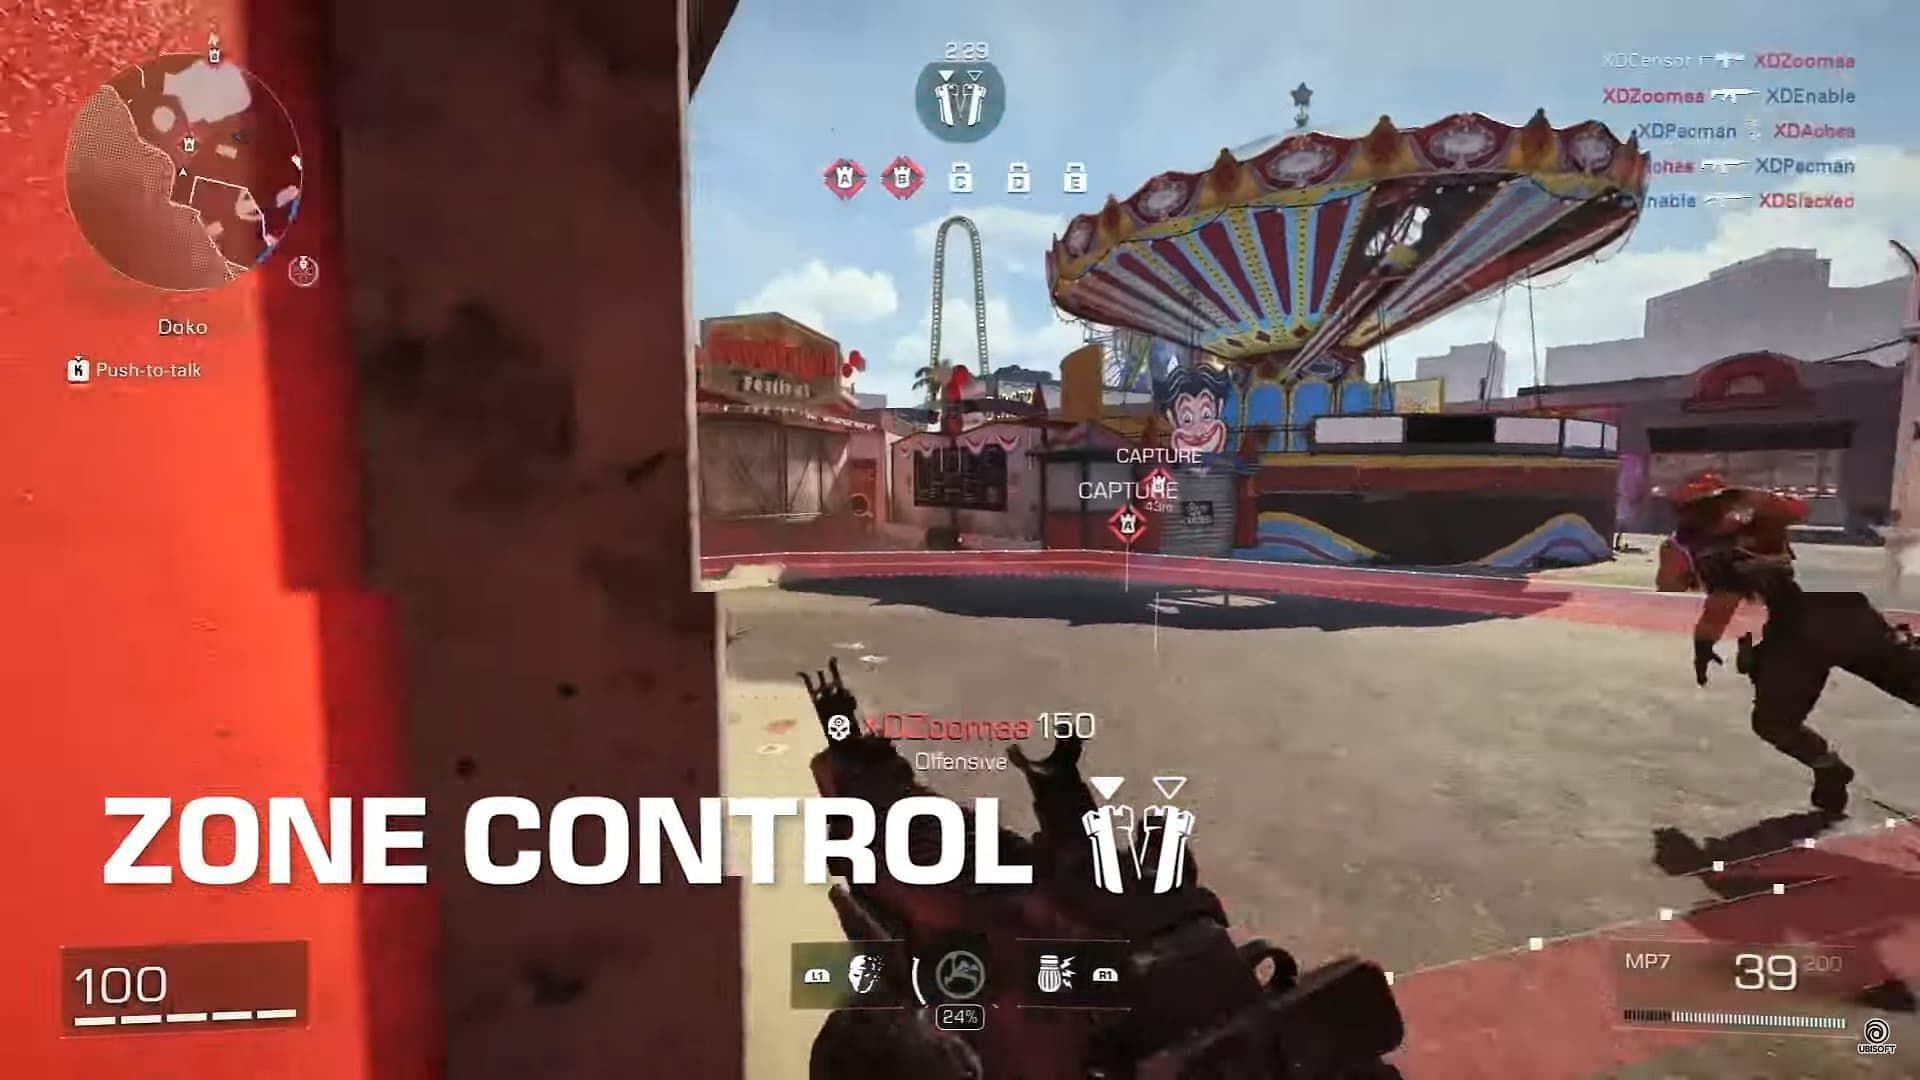 Zone Control in XDefiant (Image via Ubisoft)